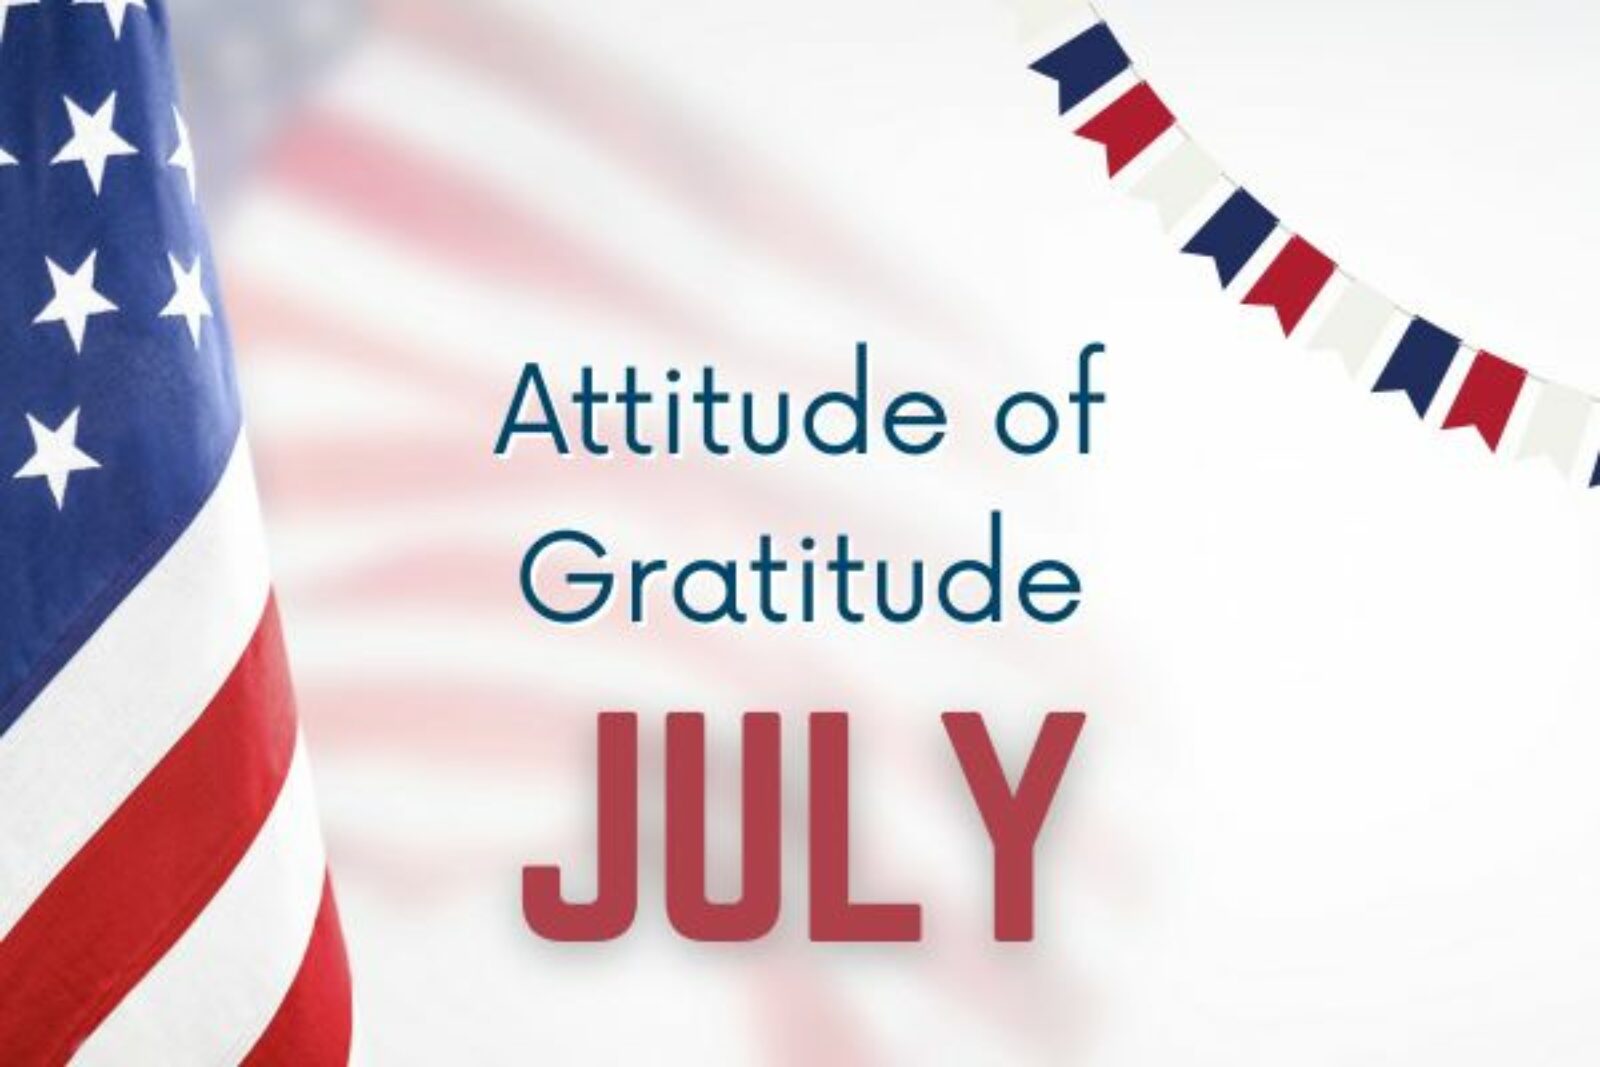 Attitude of Gratitude: July